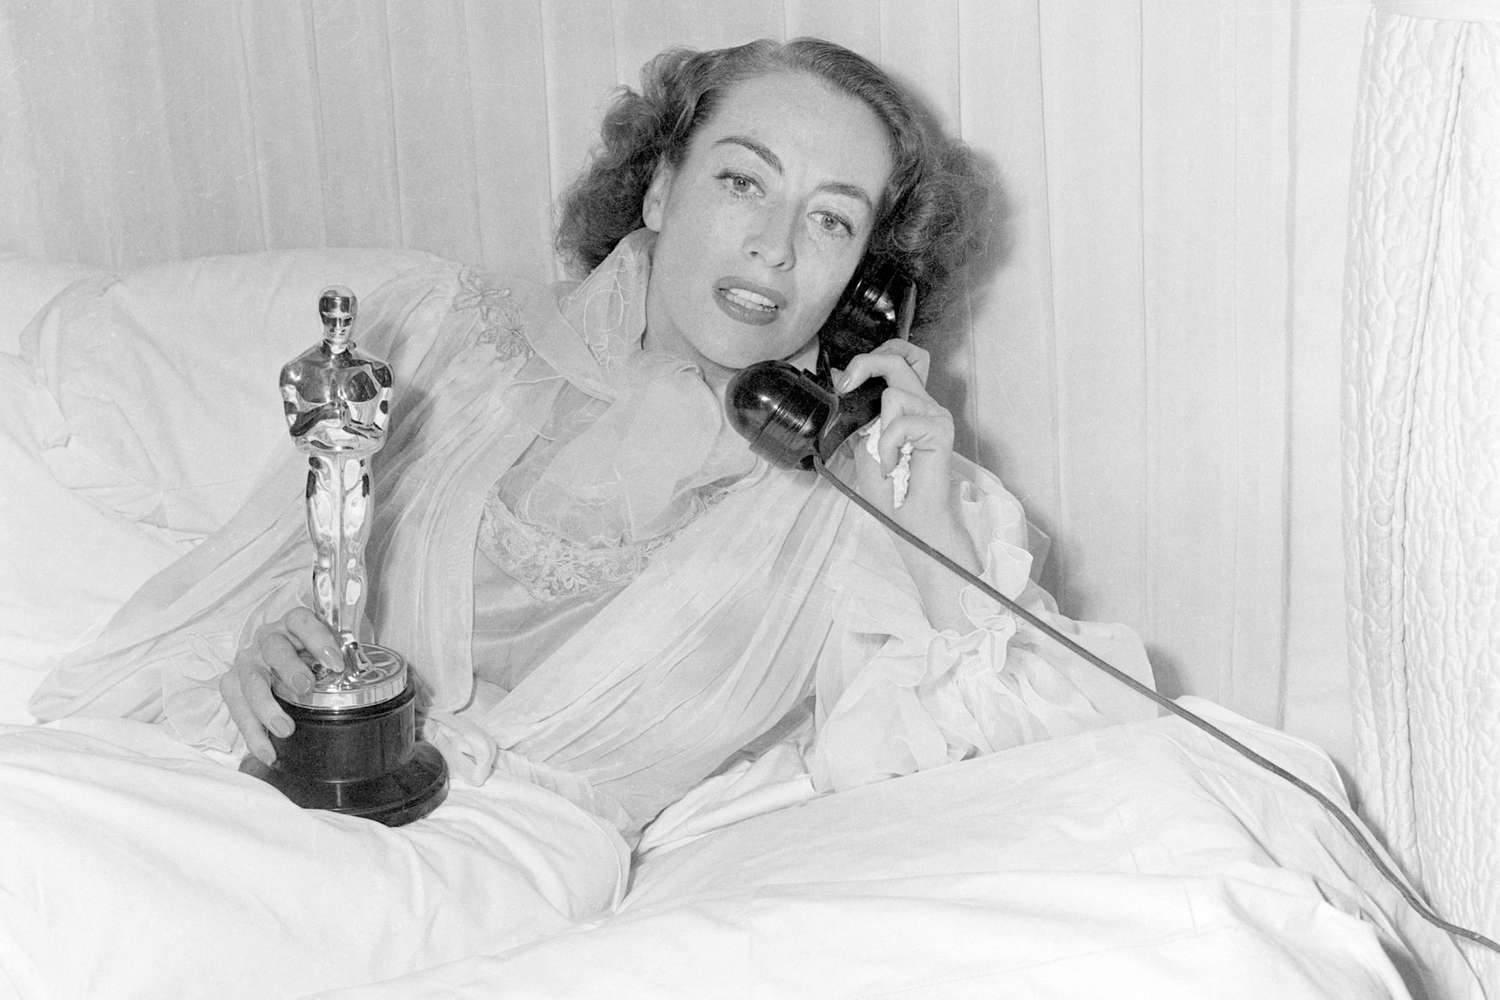 Joan Crawford's Oscar